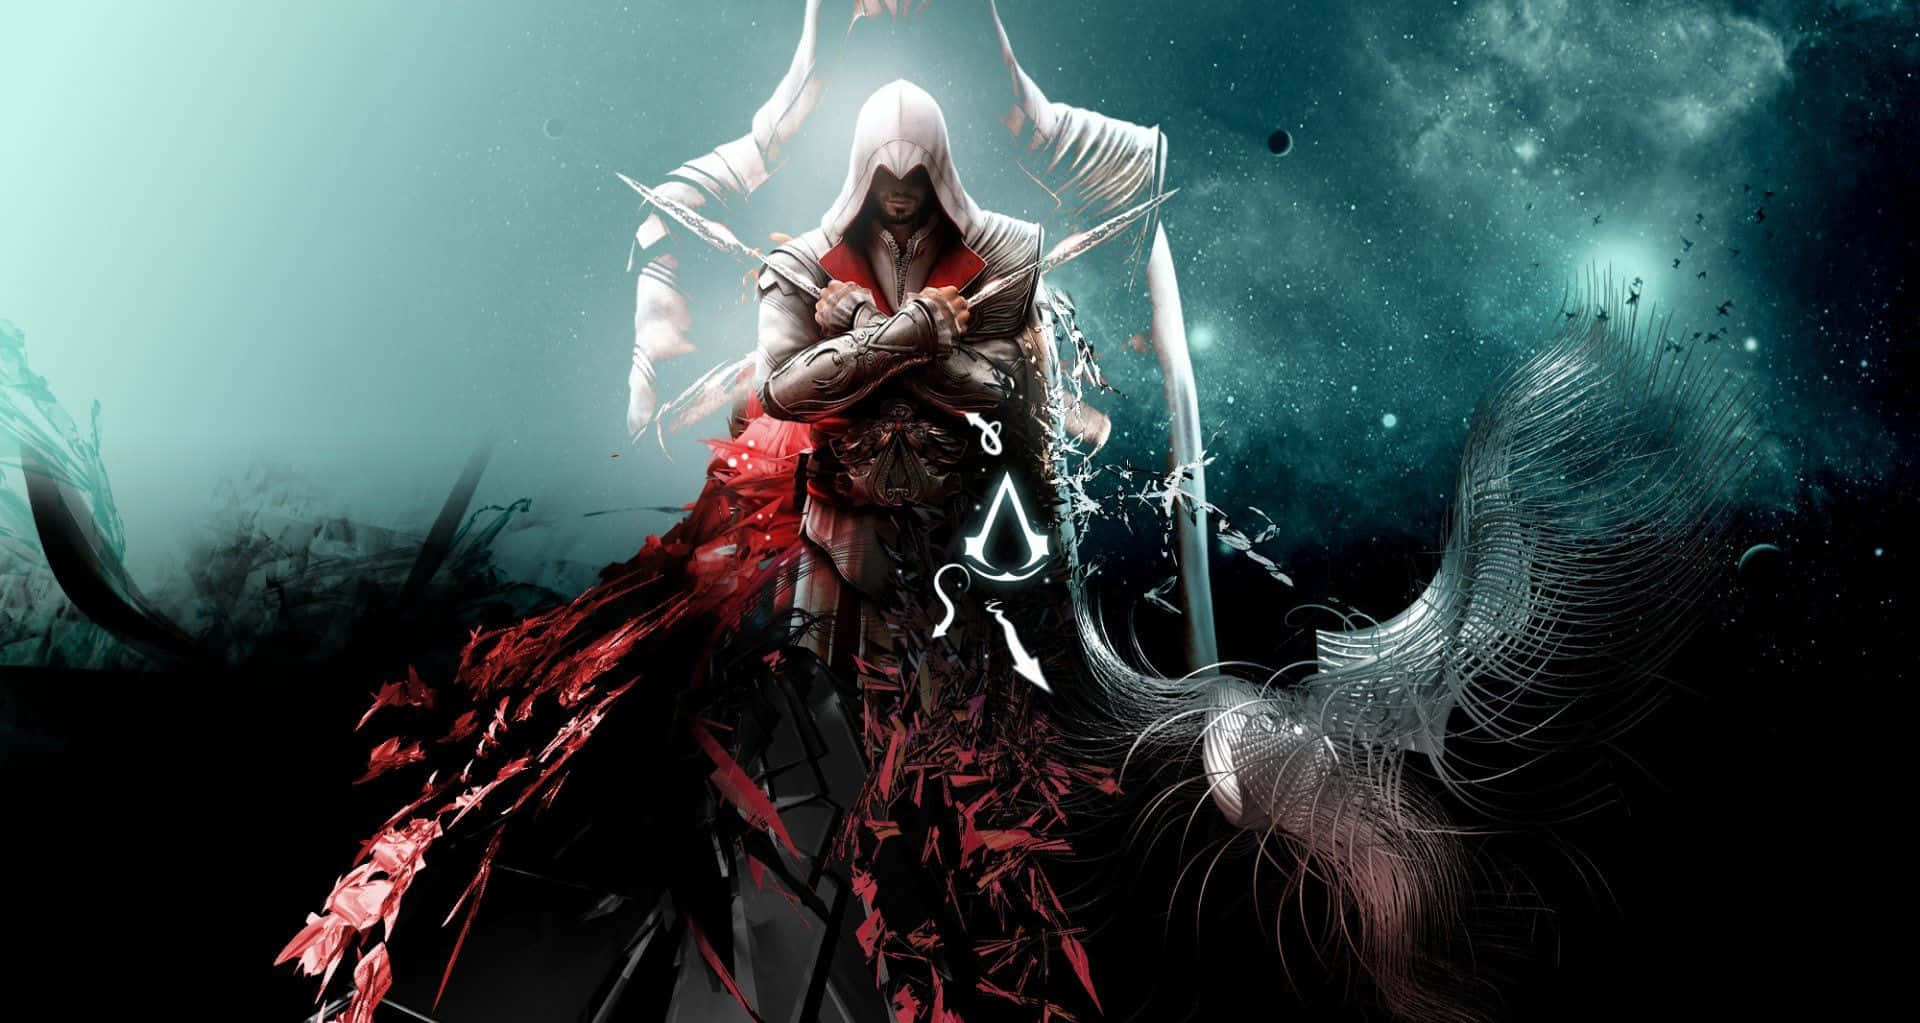 Stunning Assassin's Creed Brotherhood Game Image Wallpaper